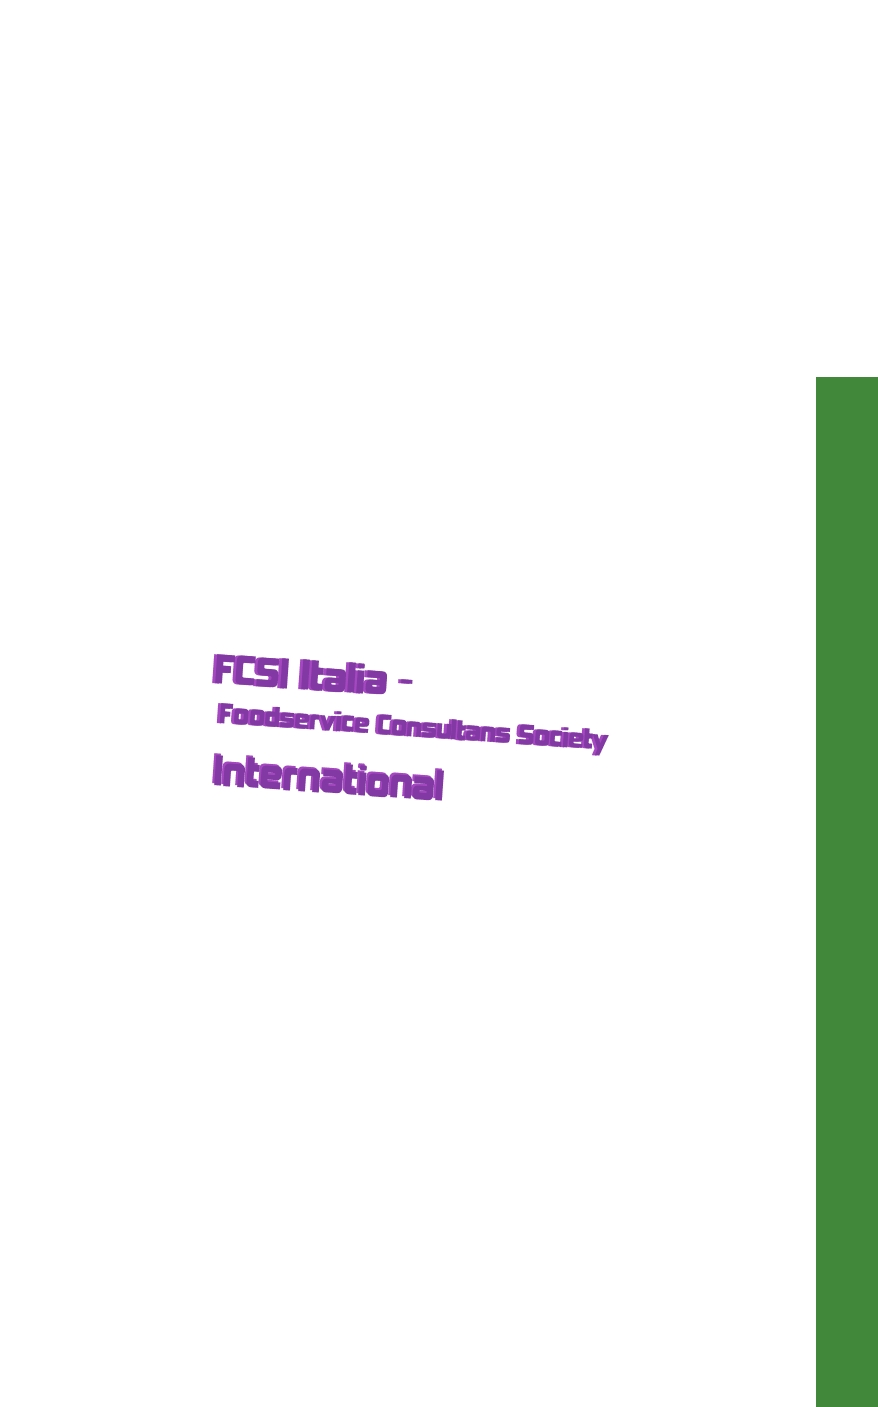 logo FCSI Italia - Foodservice Consultans Society International